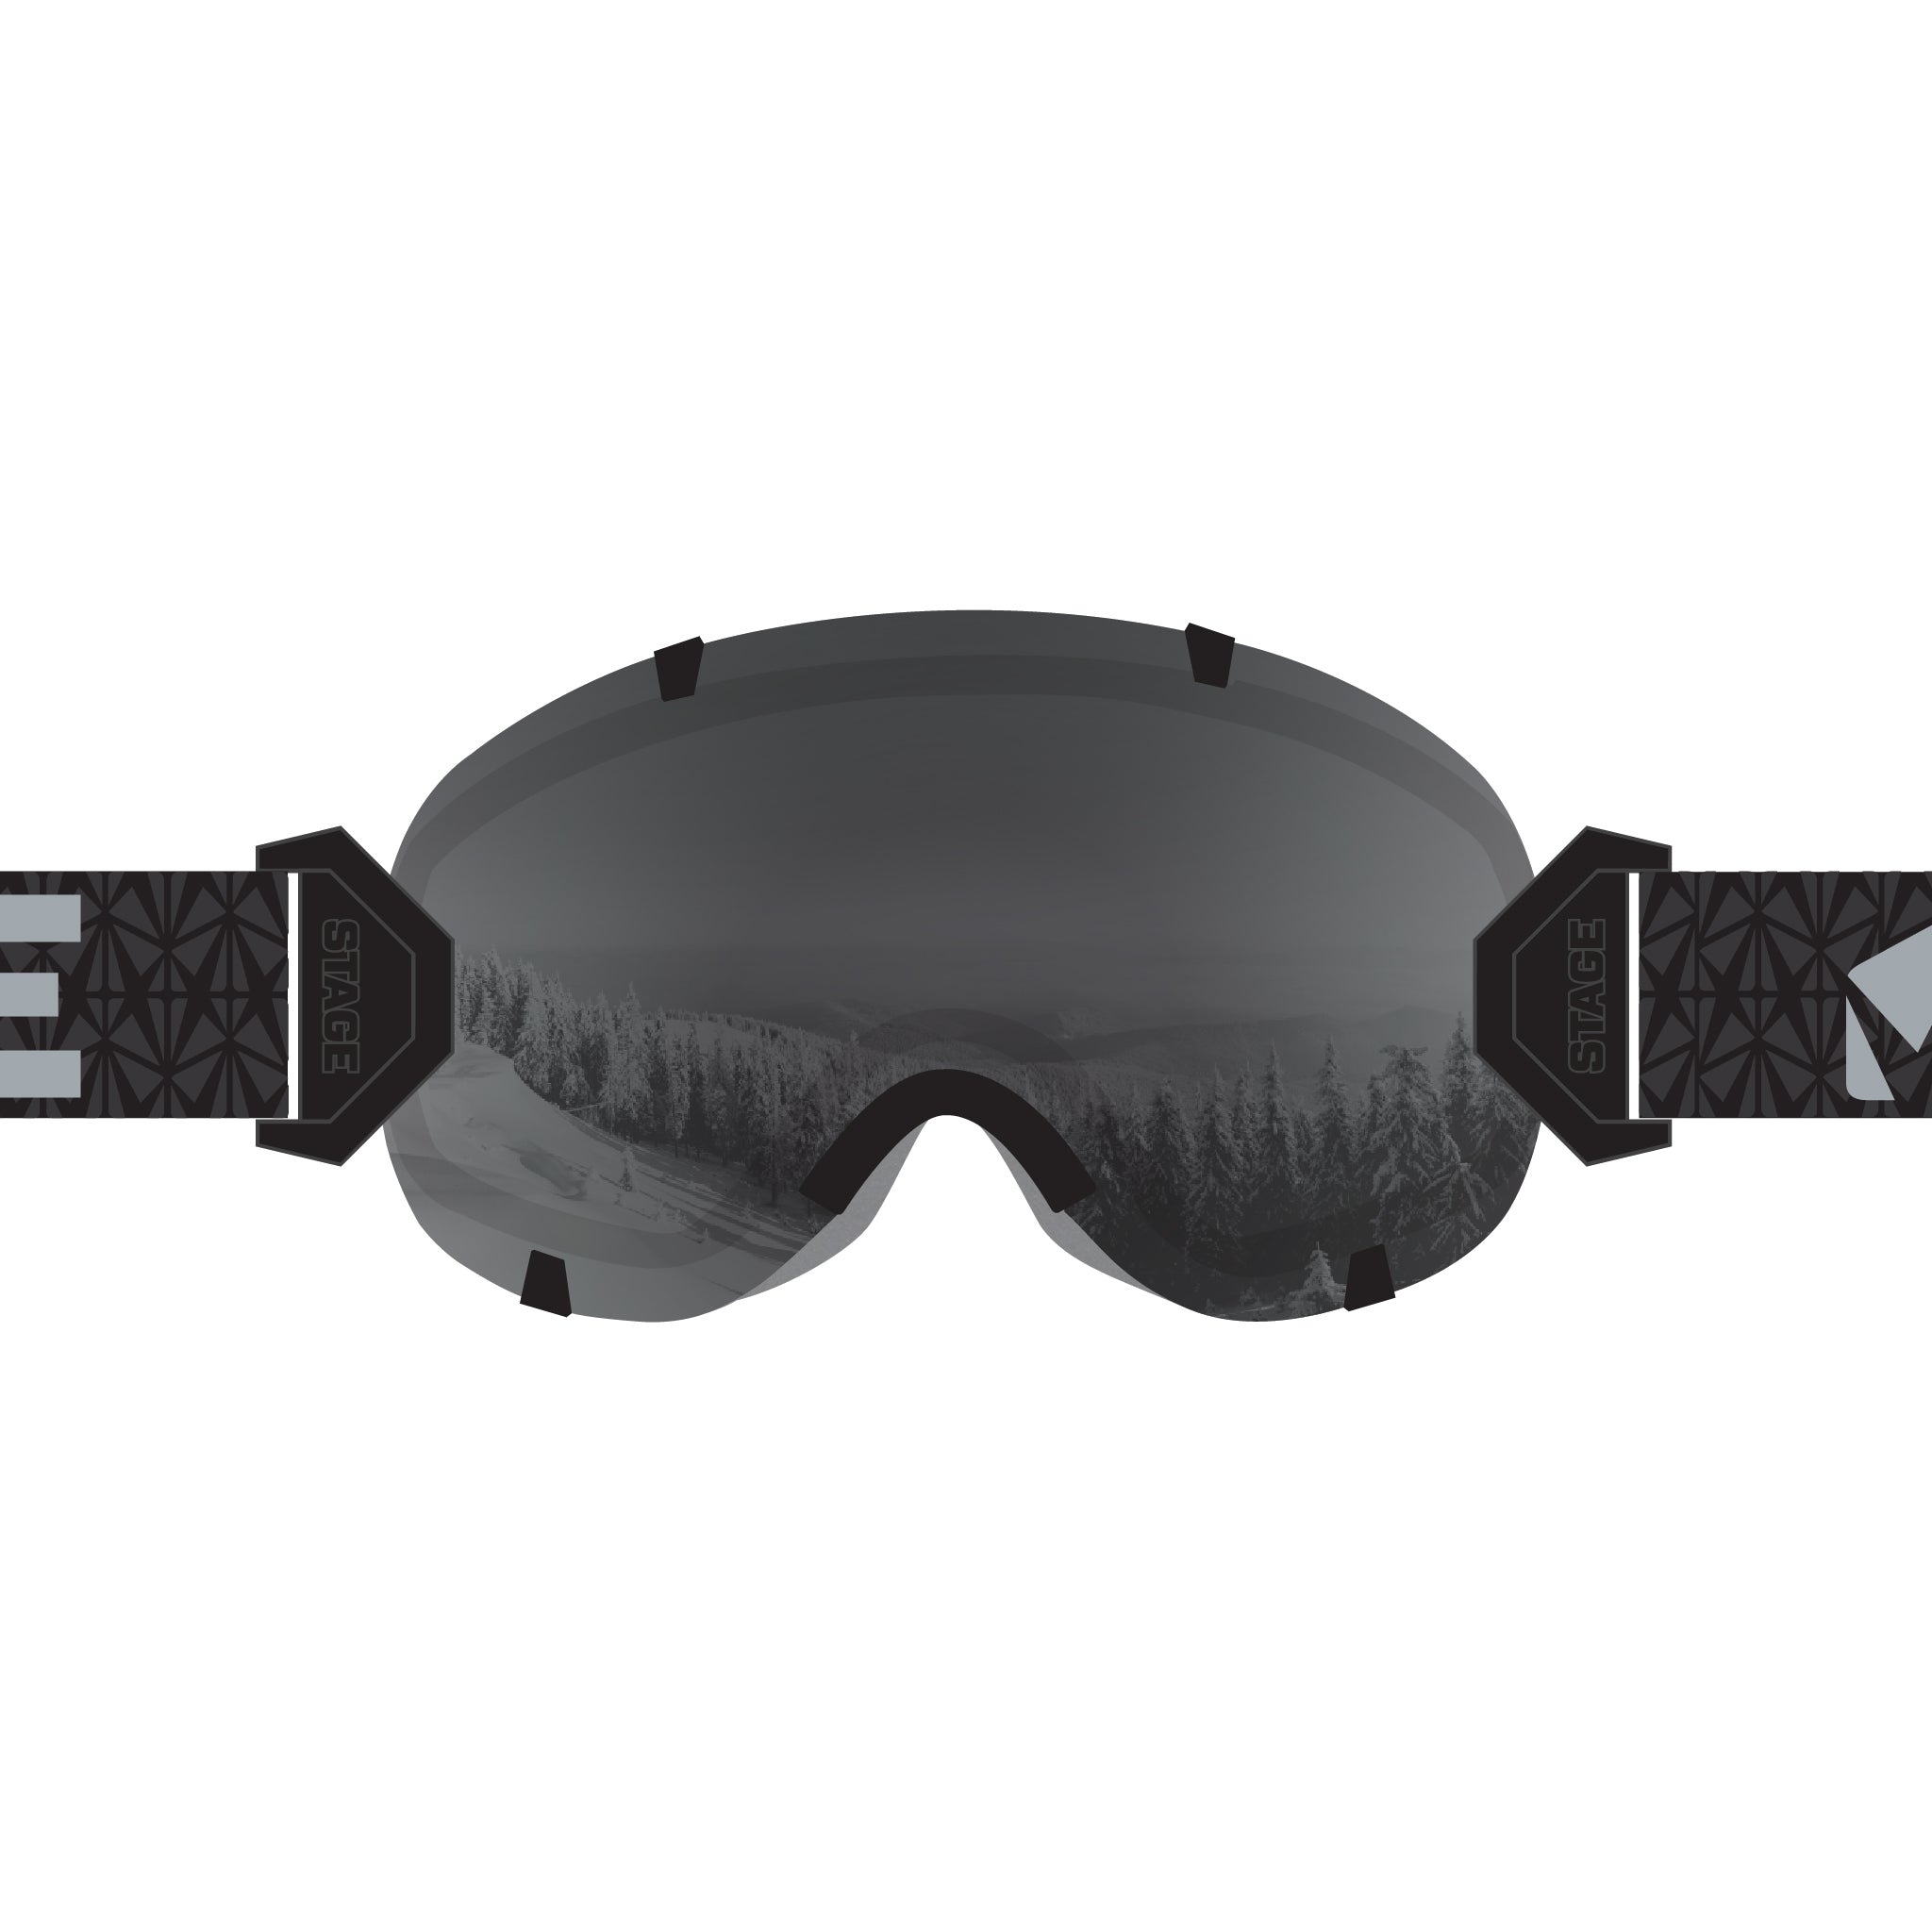 Stunt Black - Adult Ski Goggle